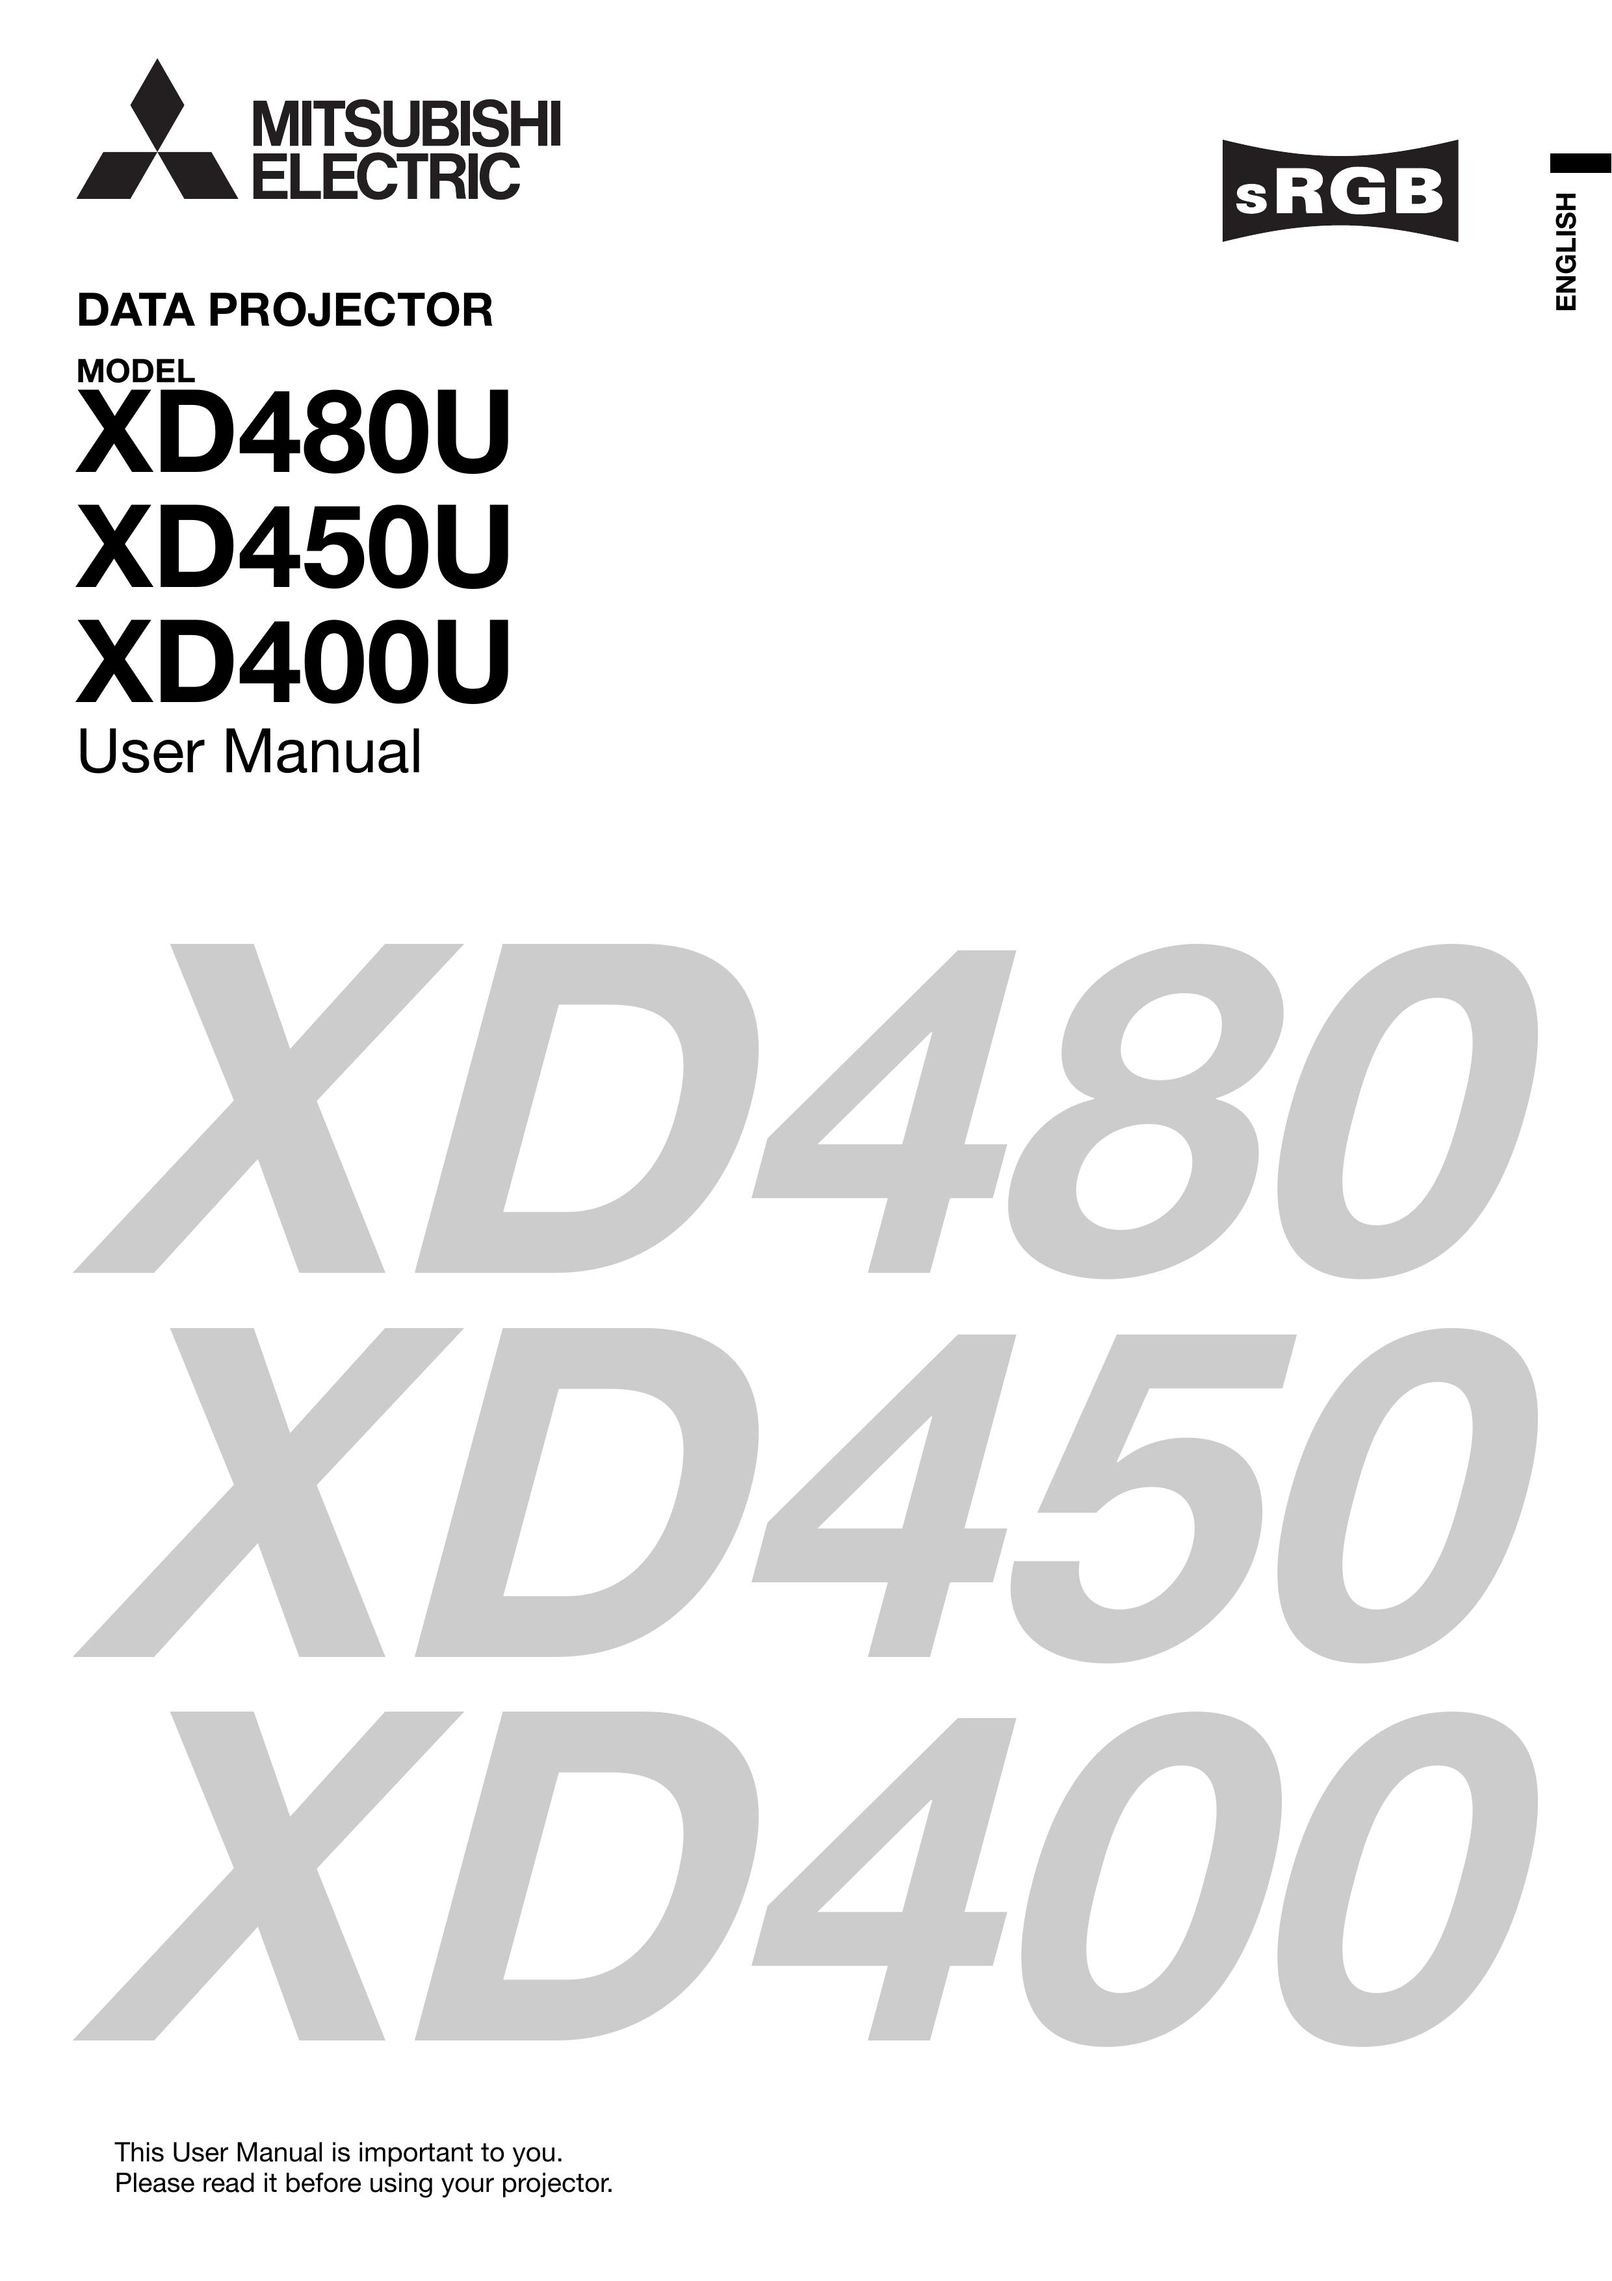 Mitsubishi Electronics XD480U Projector Accessories User Manual